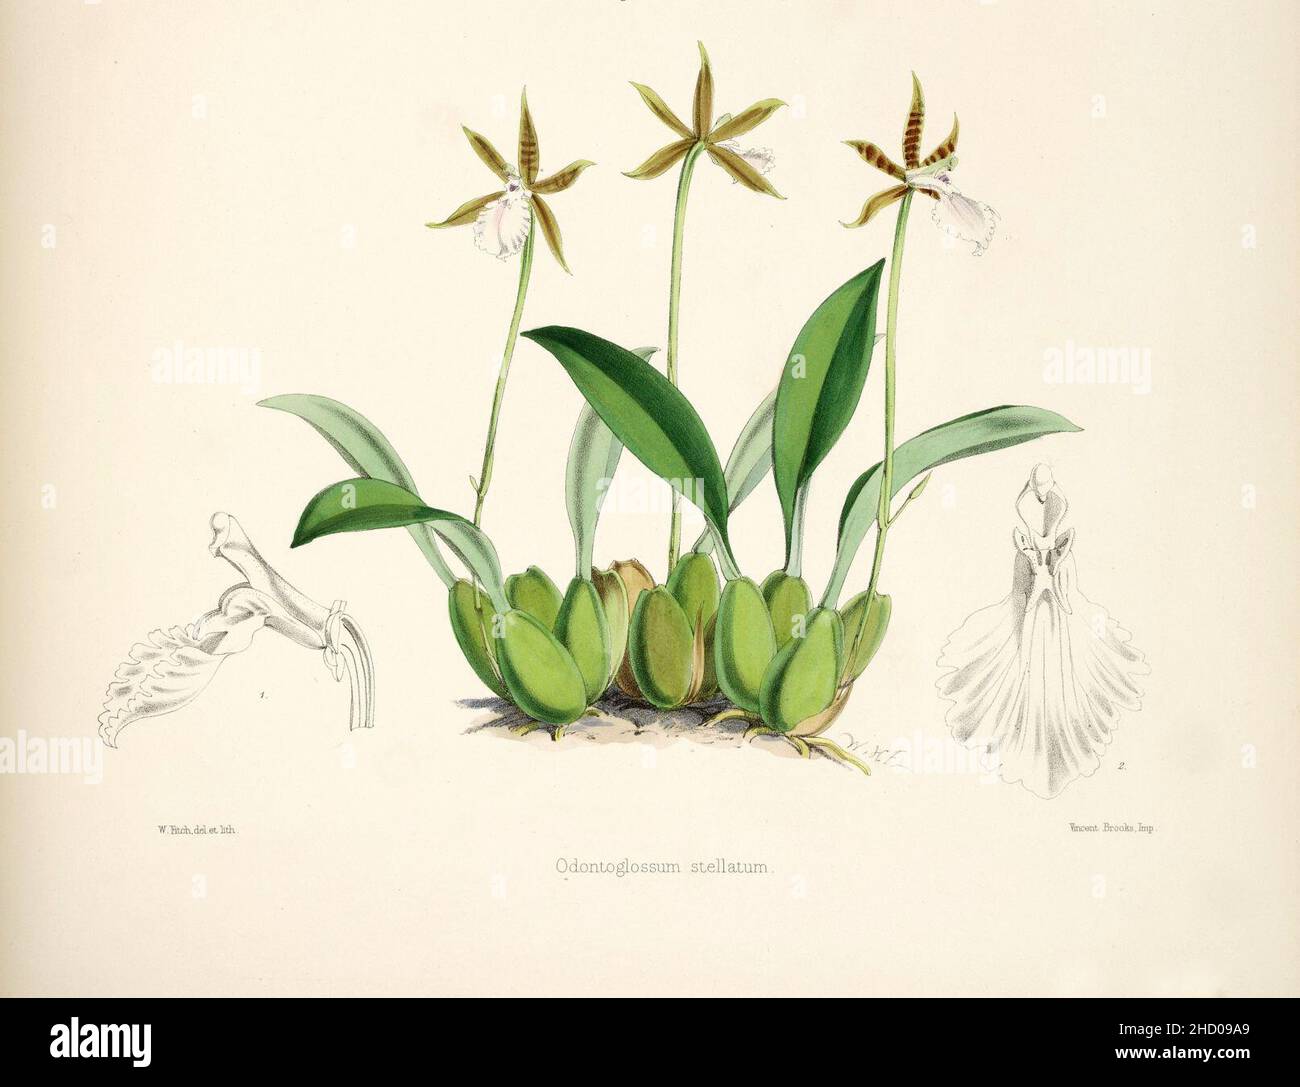 Rhynchostele stellata (as Odontoglossum stellatum) - pl. 13, lower fig. - Bateman, Monogr.Odont. Stock Photo